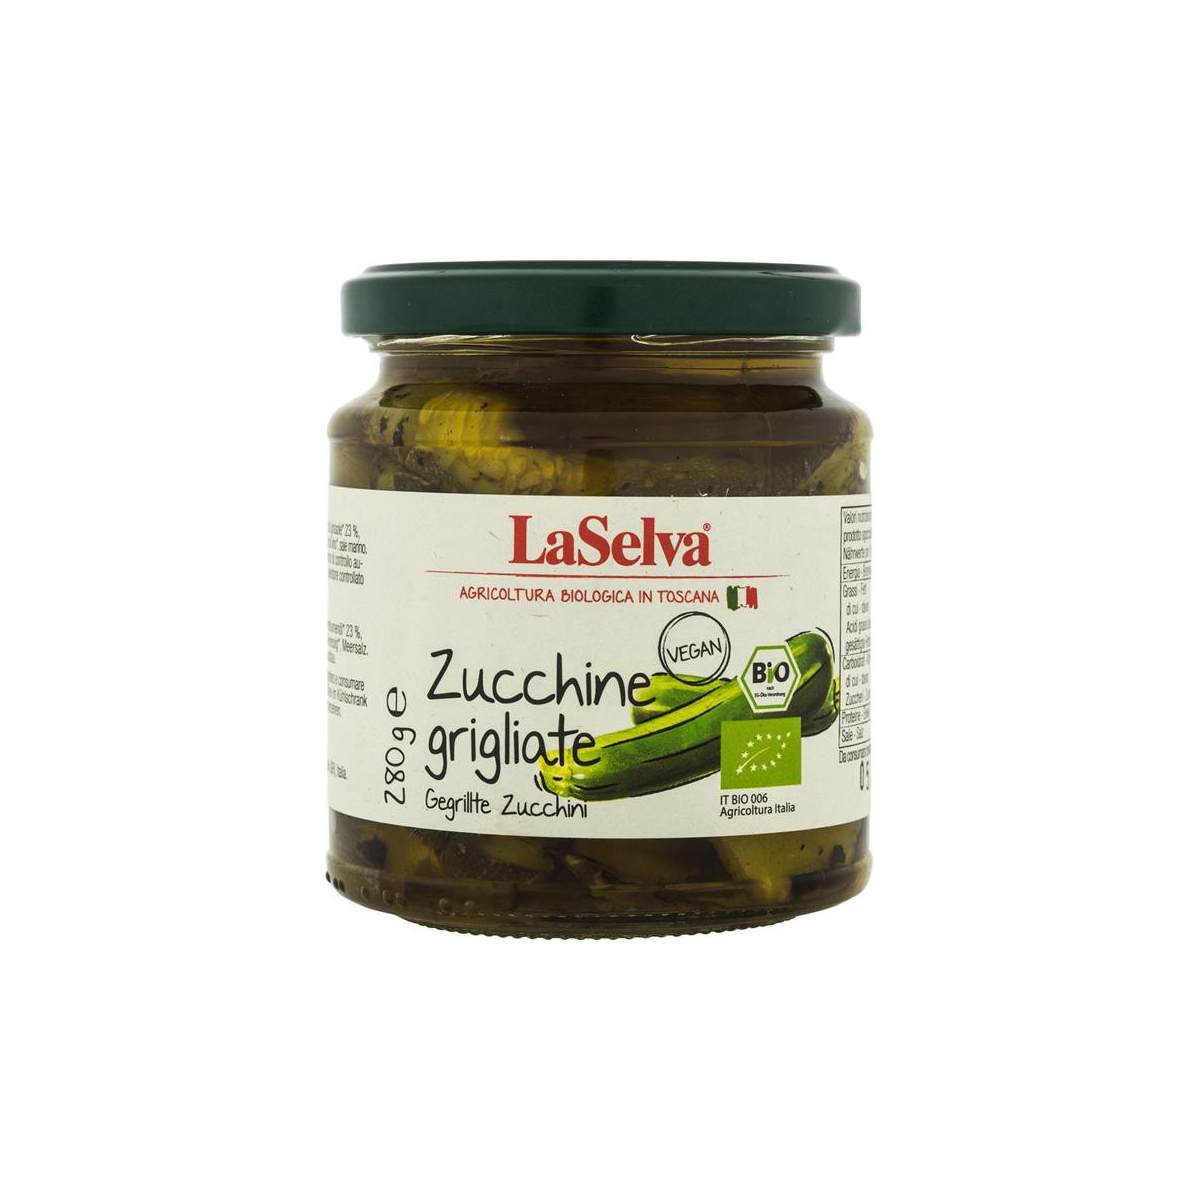 Gegrillte Zucchini in Olivenöl